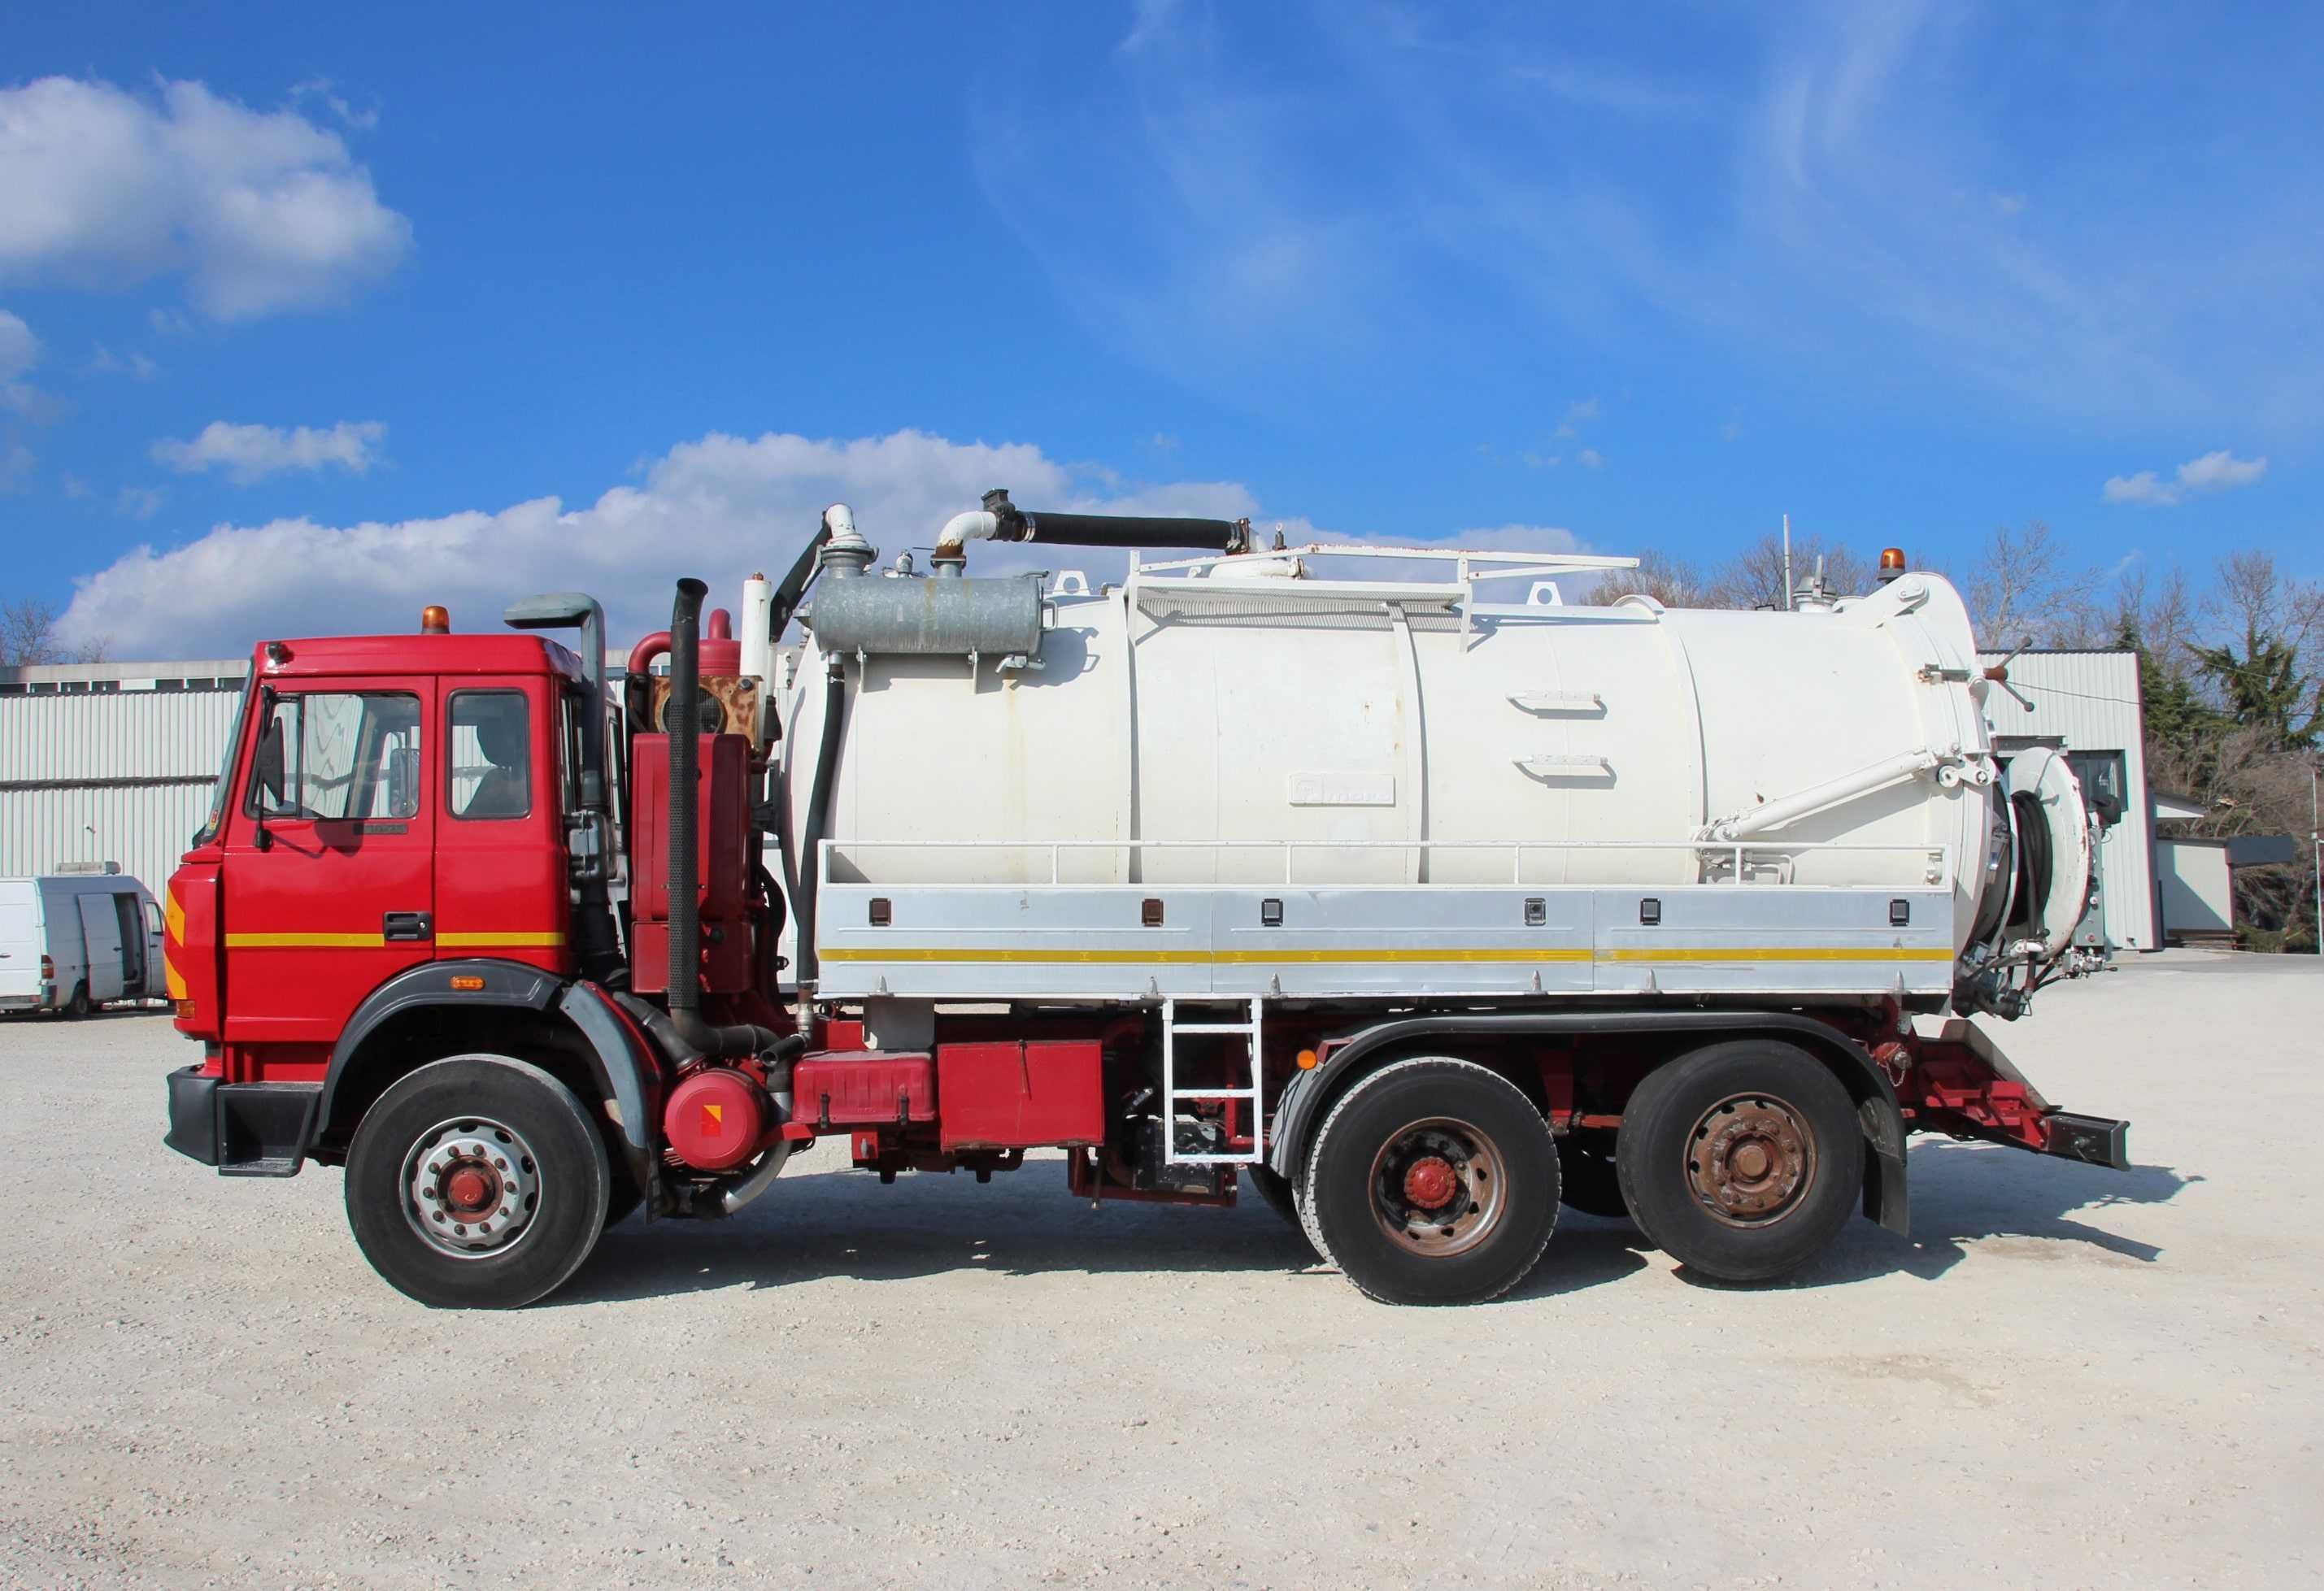 Каналопочистваща машина ВОМА IVECO 190-266Х2 камион за канали цистерна